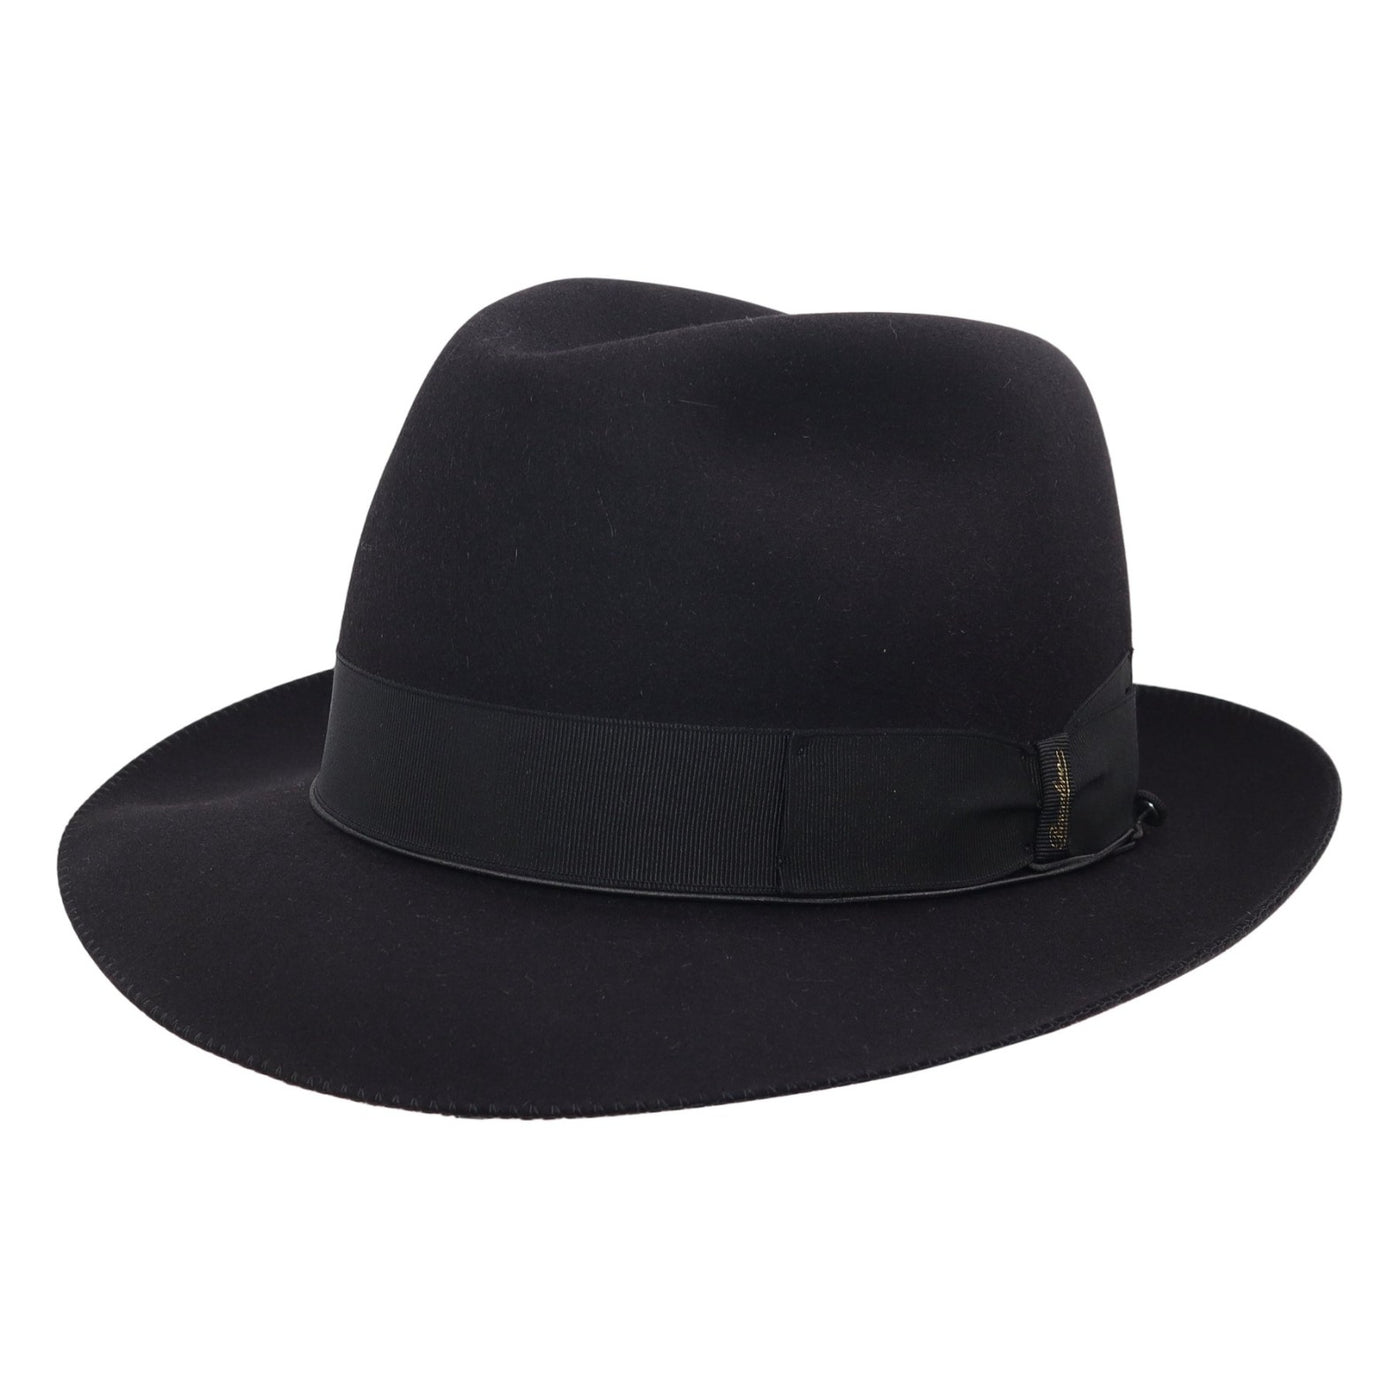 Astuccio 214, product_type] - Borsalino for Atica fedora hat